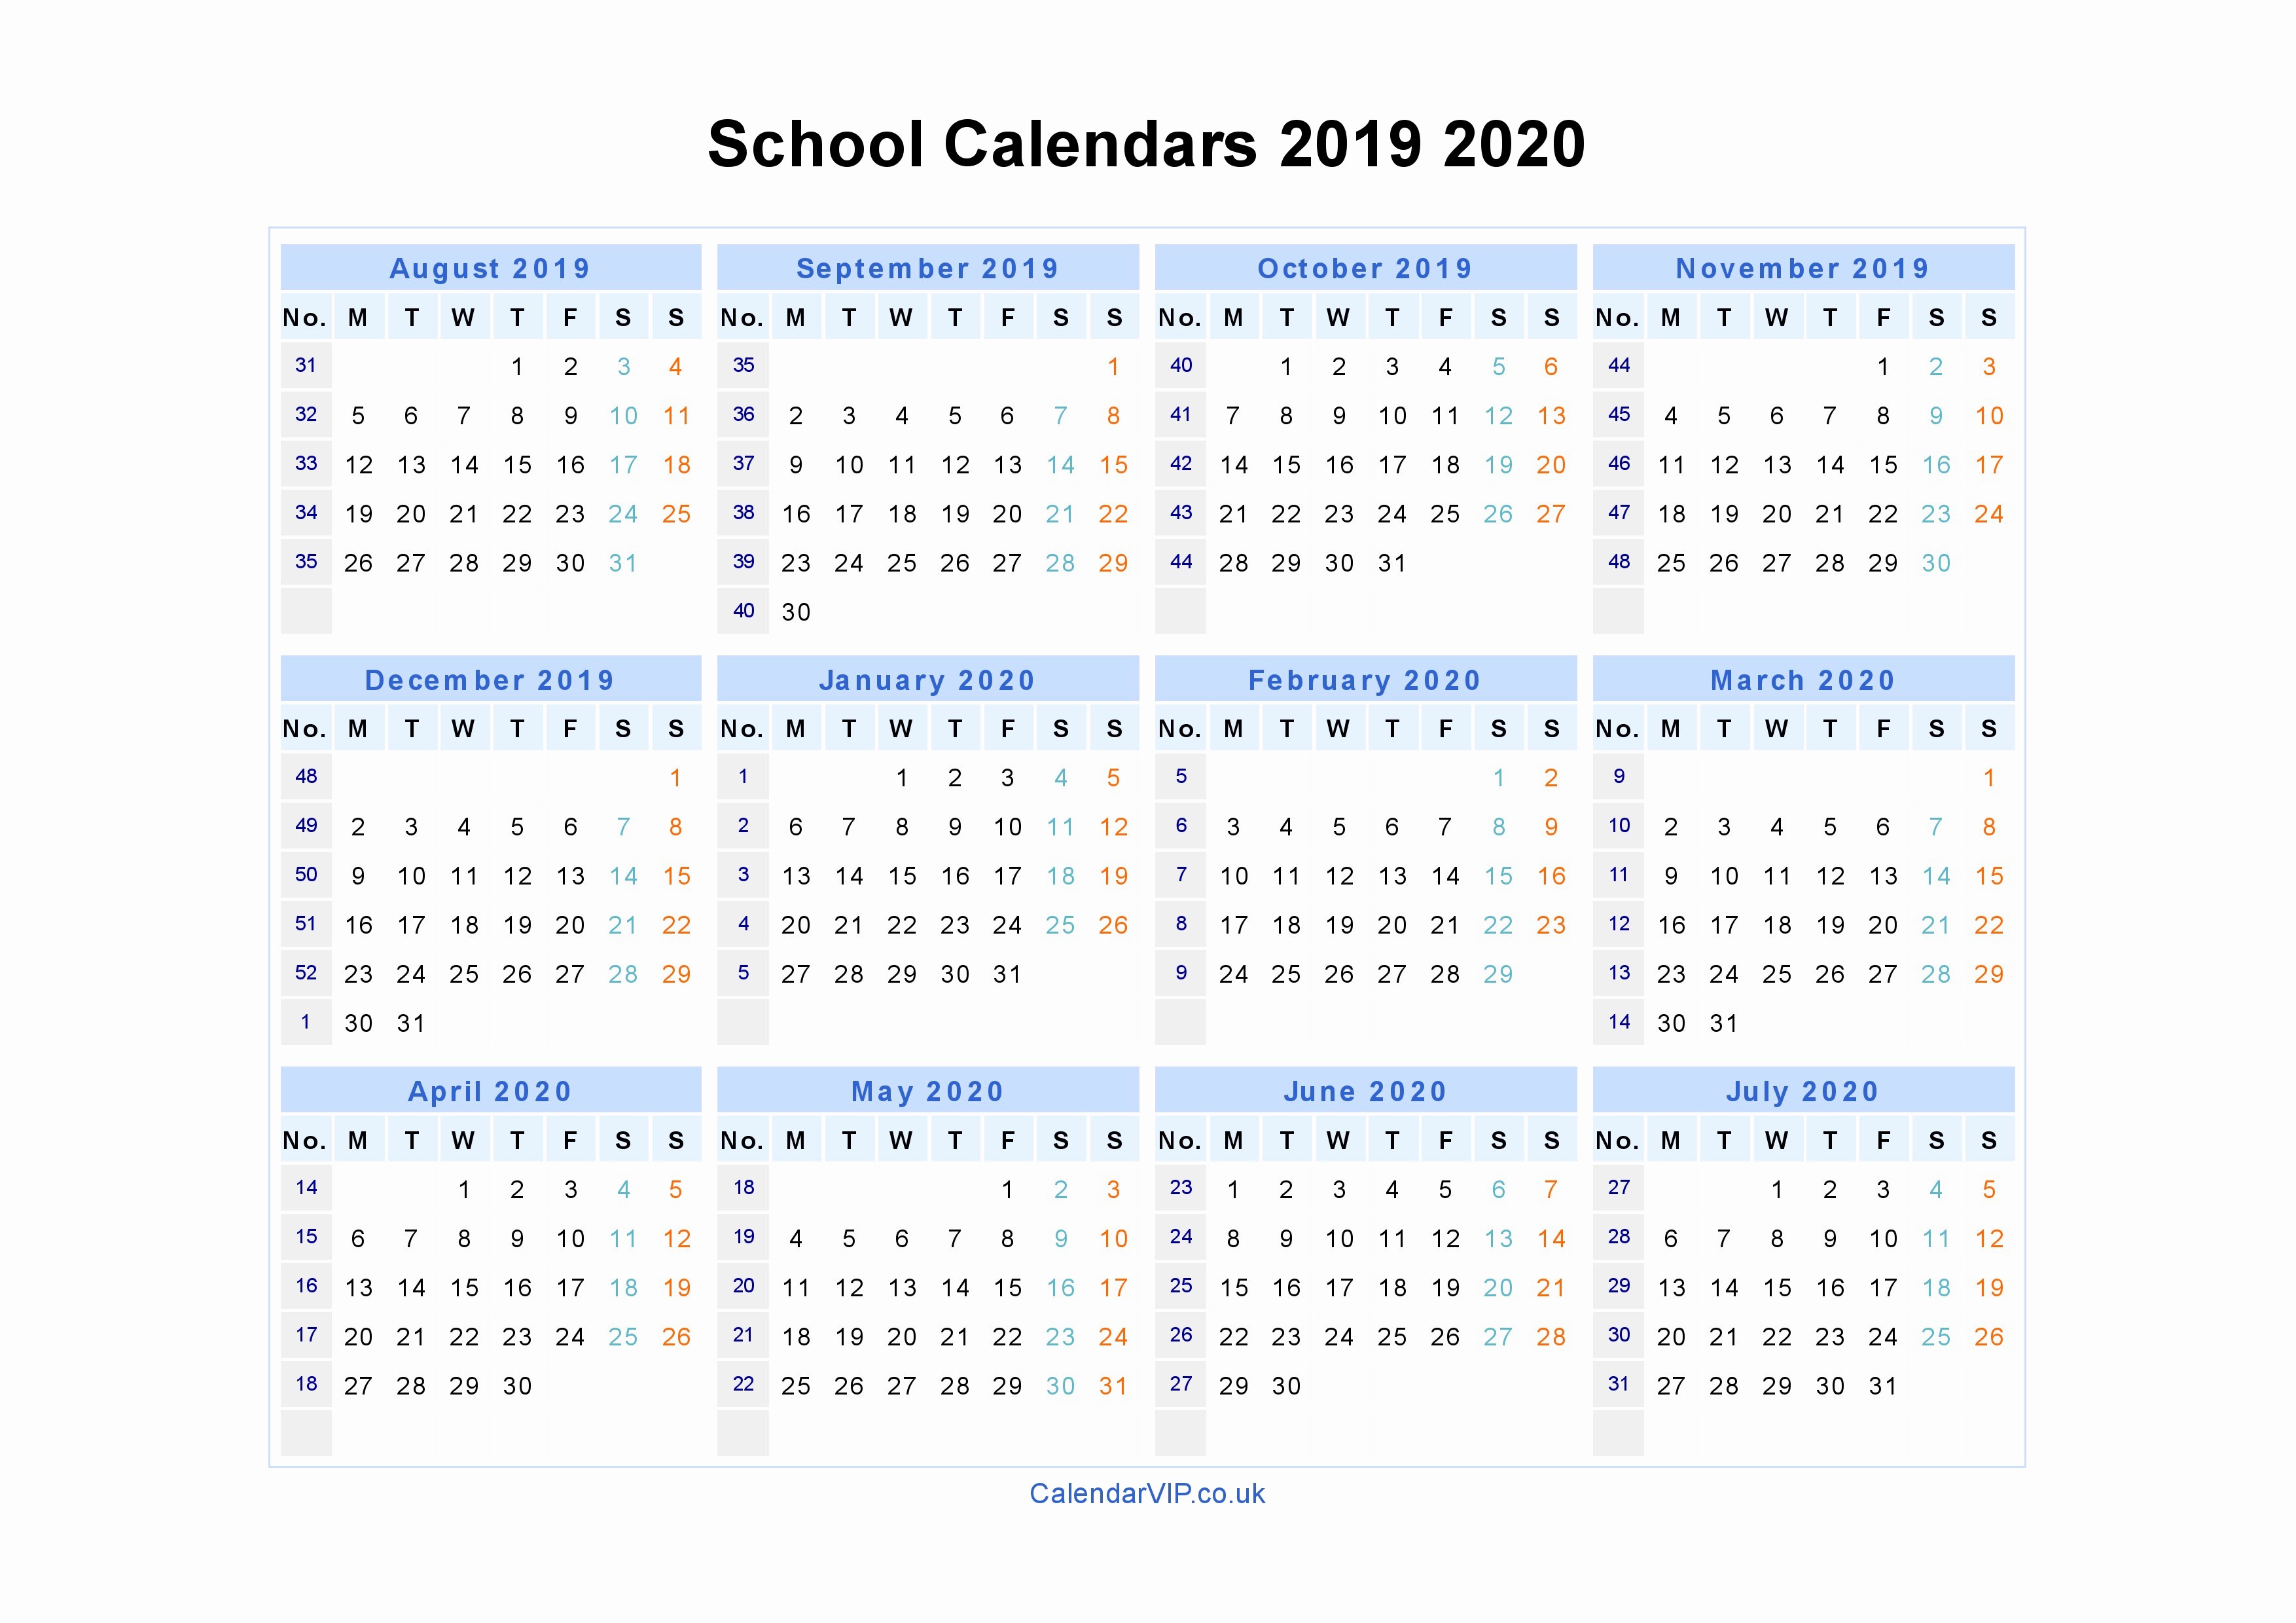 2019 and 2020 Calendar Printable Fresh School Calendars 2019 2020 Calendar From August 2019 to